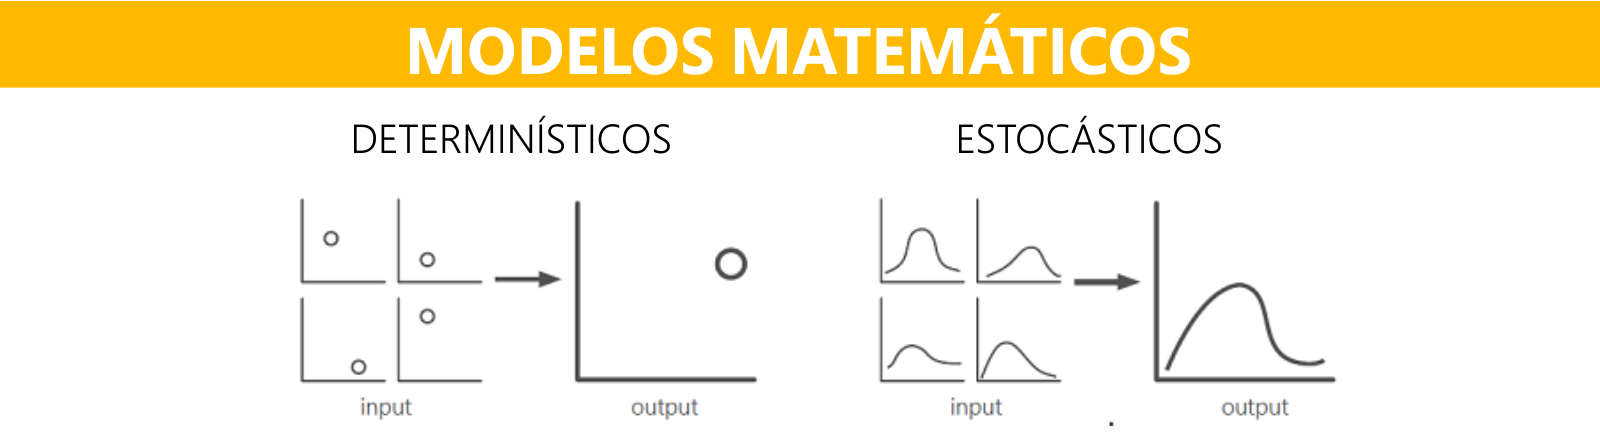 DatosParaTodos - modelos matematicos - 09072015